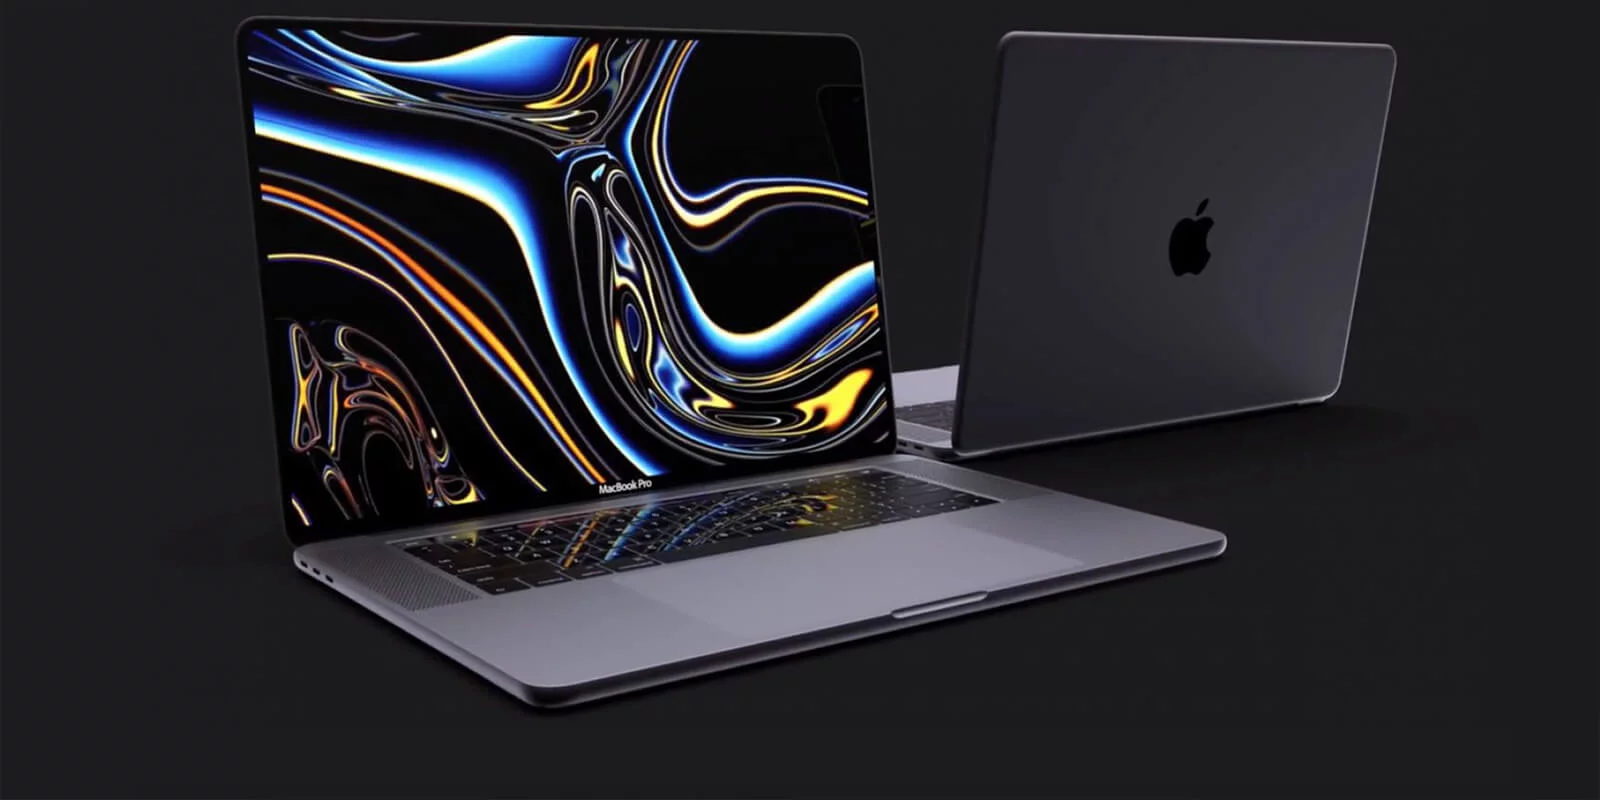 Ноутбук Apple MacBook Pro 16 Retina, Silver 512GB (MVVL2) 2019